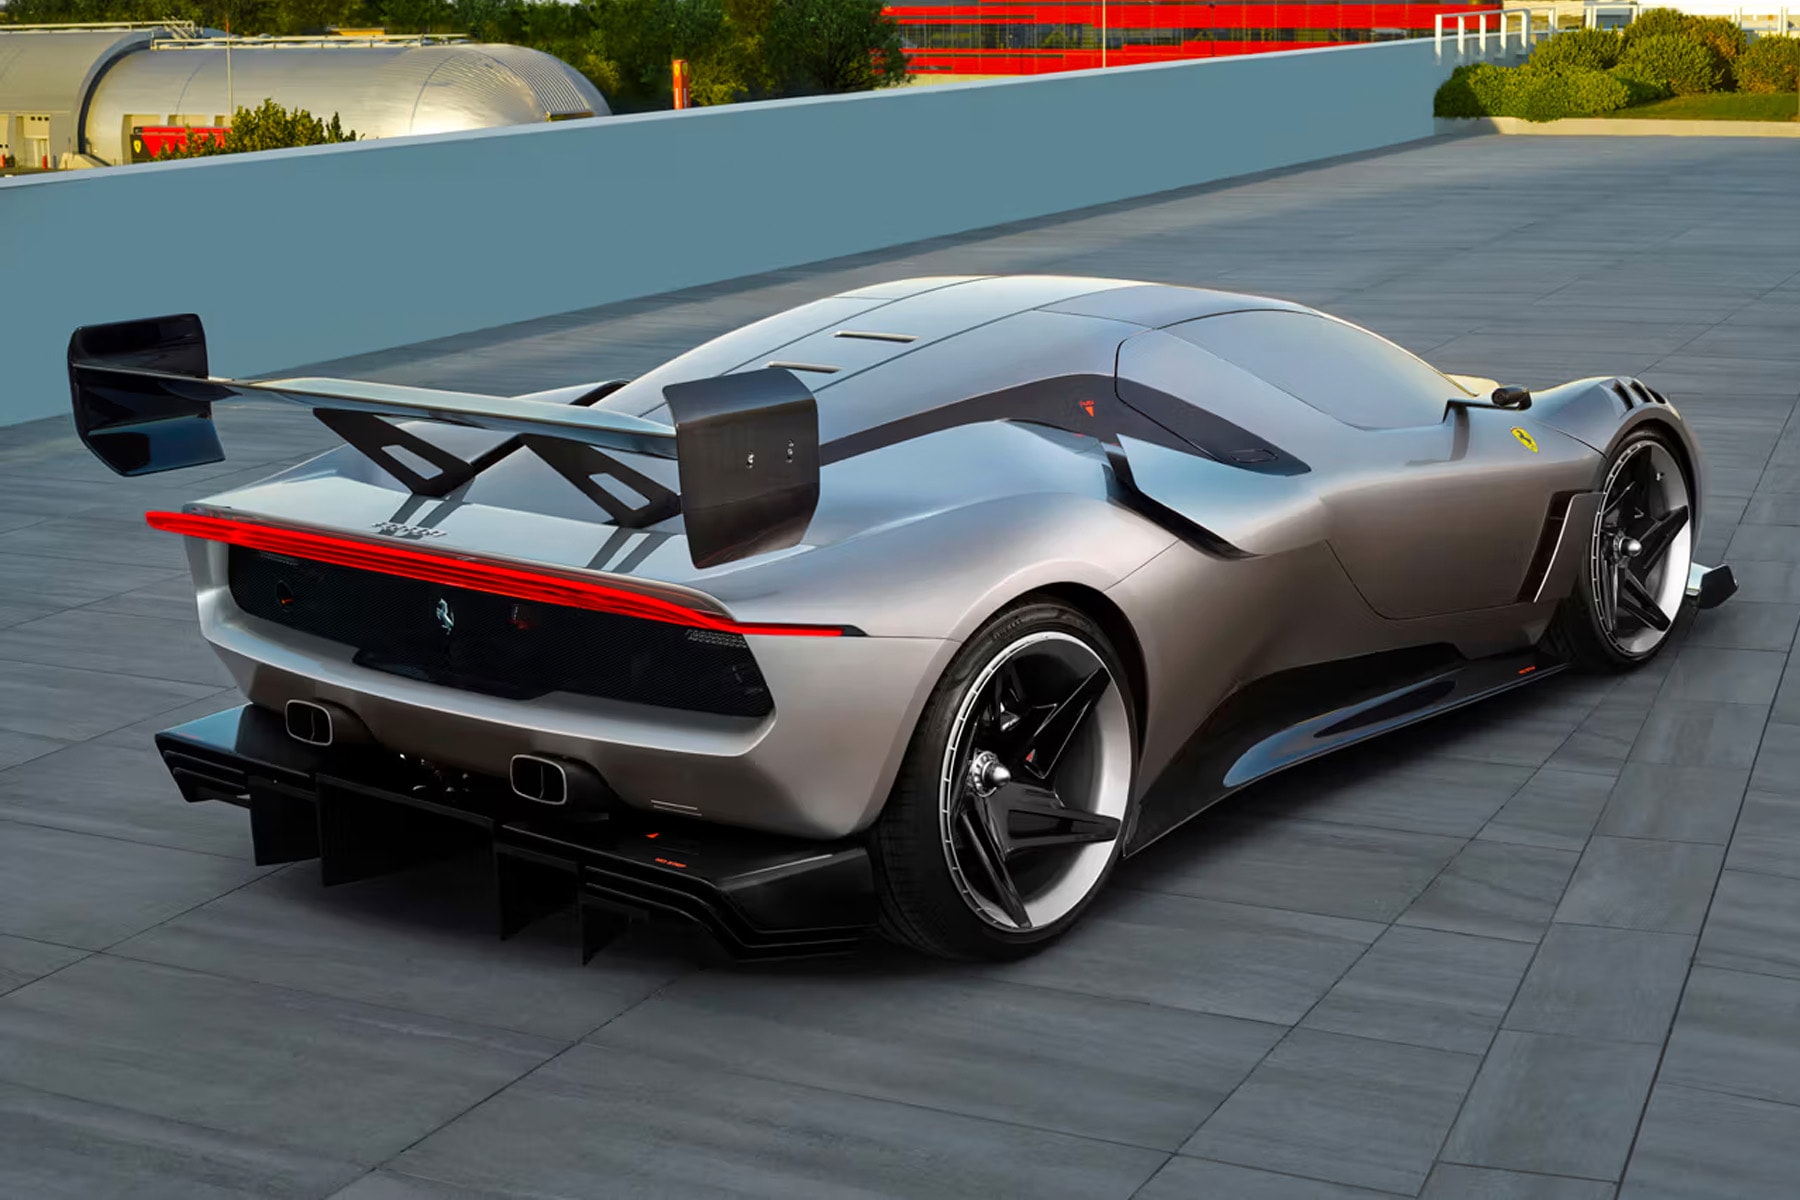 Ferrari 正式發表全球唯一定製車款 KC23